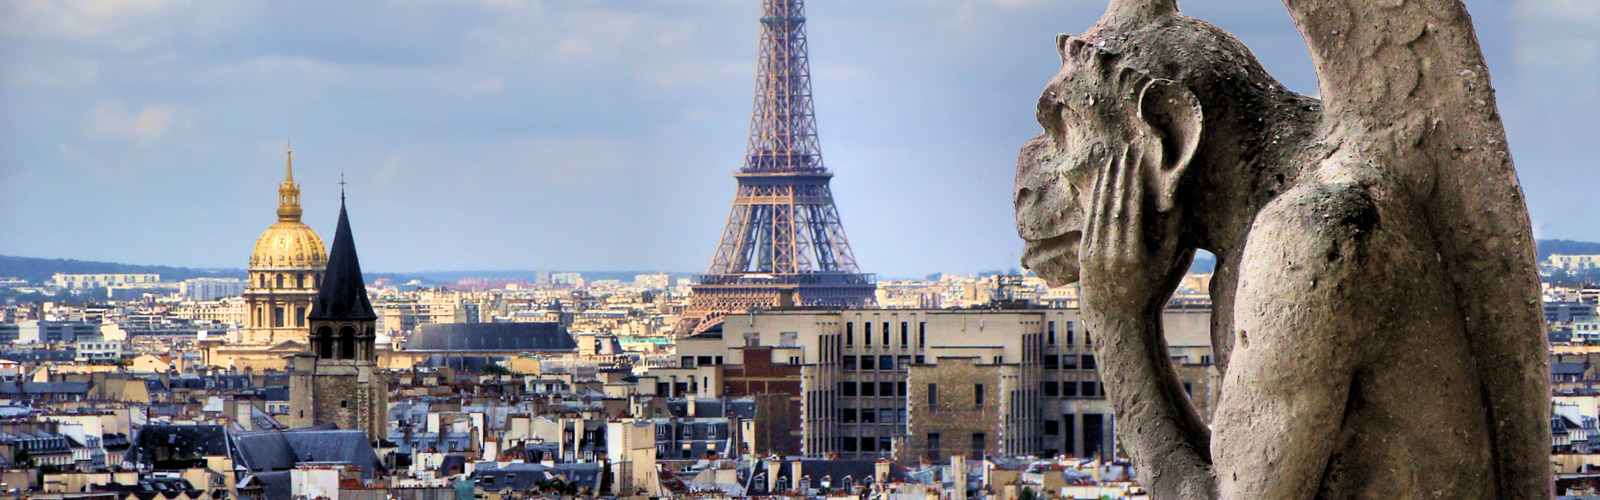 Notre dame gargoyle with Paris cityscape and Eiffel Tower